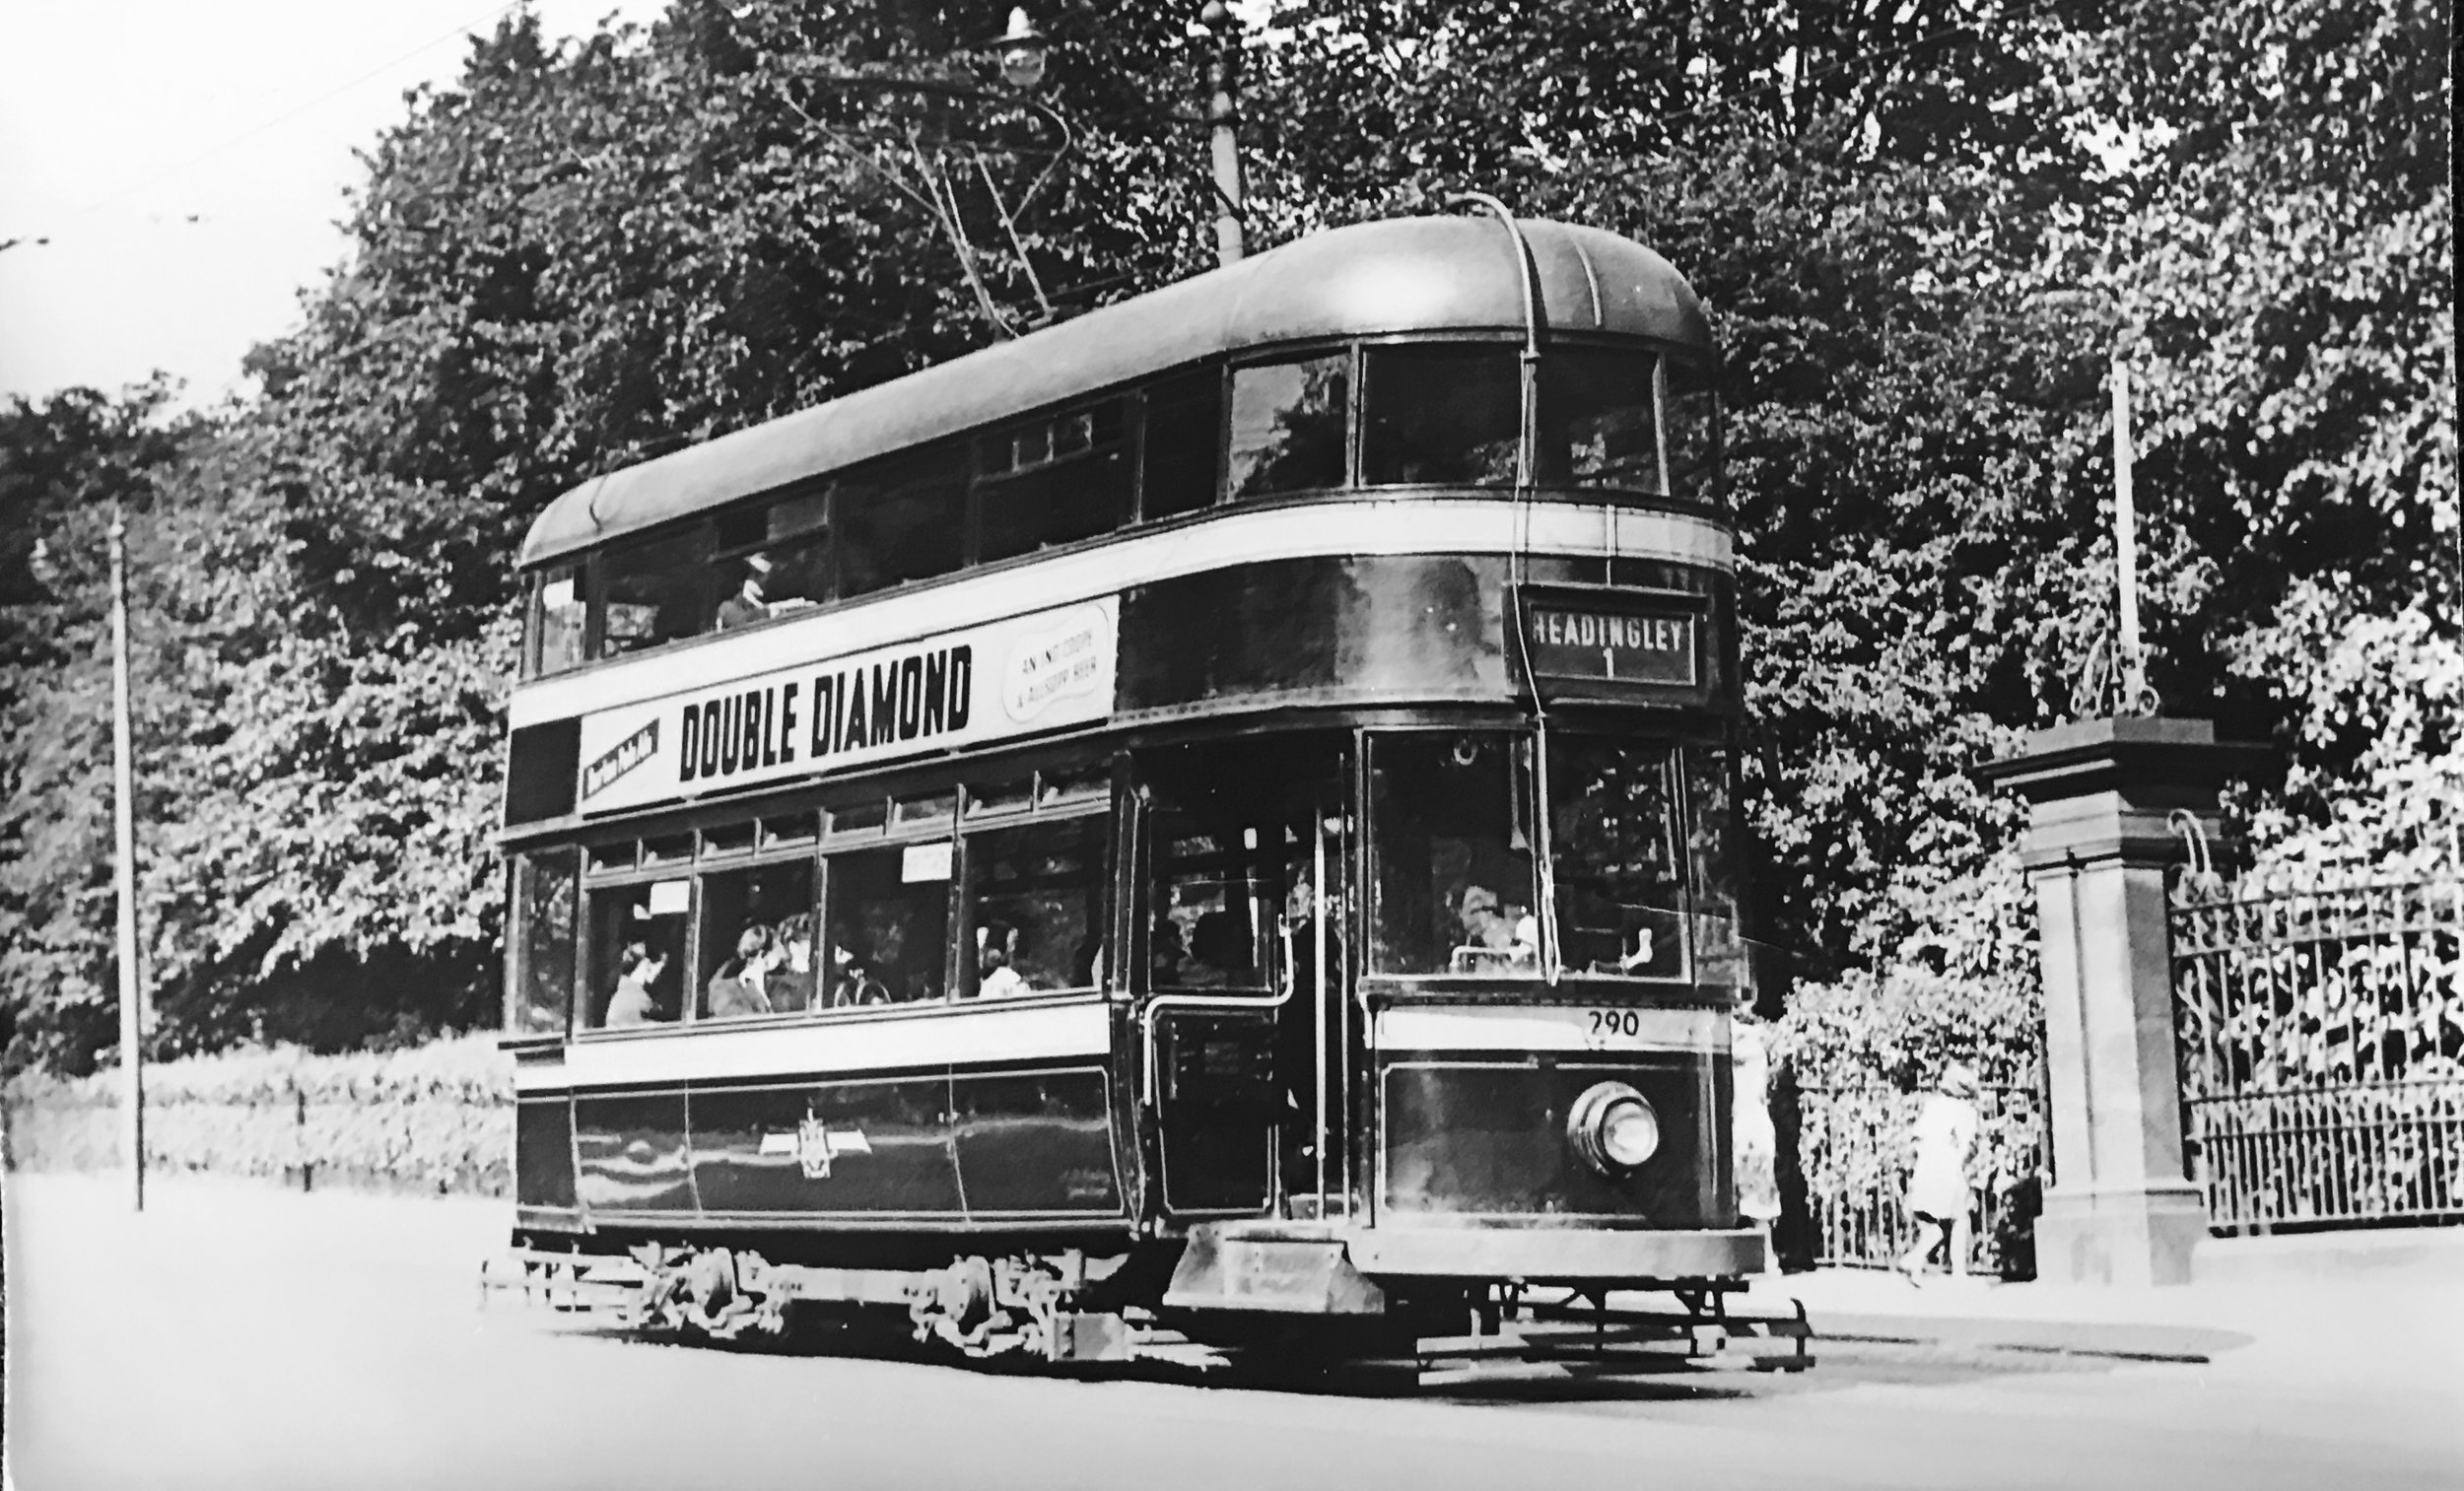 Tram No 290, route 1, destination Headingley, at Roundhay Park Gates, circa 1950